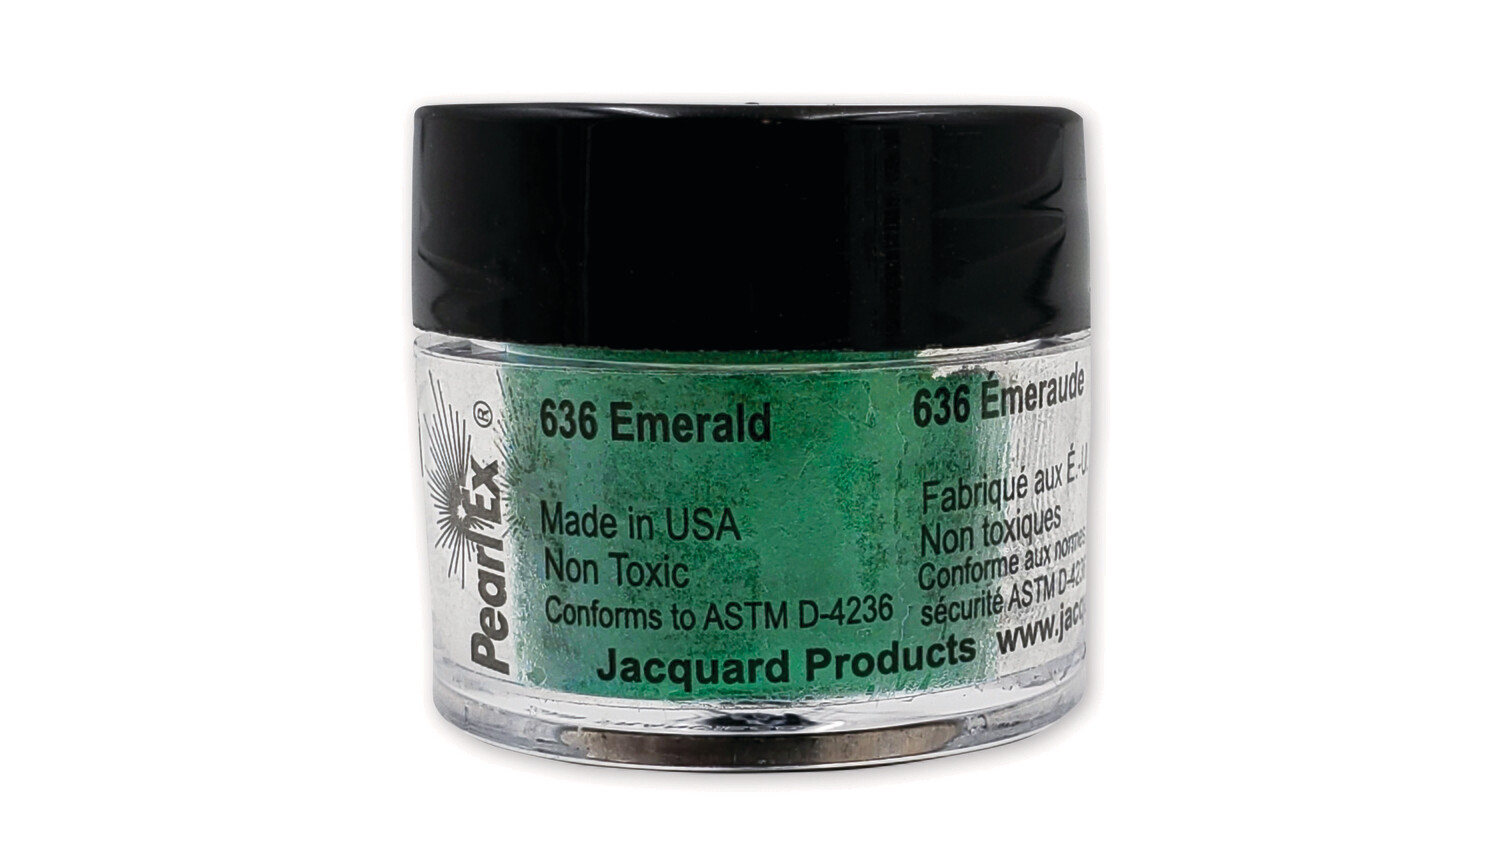 Pearl Ex Powdered Pigments, 3 gram-Emerald